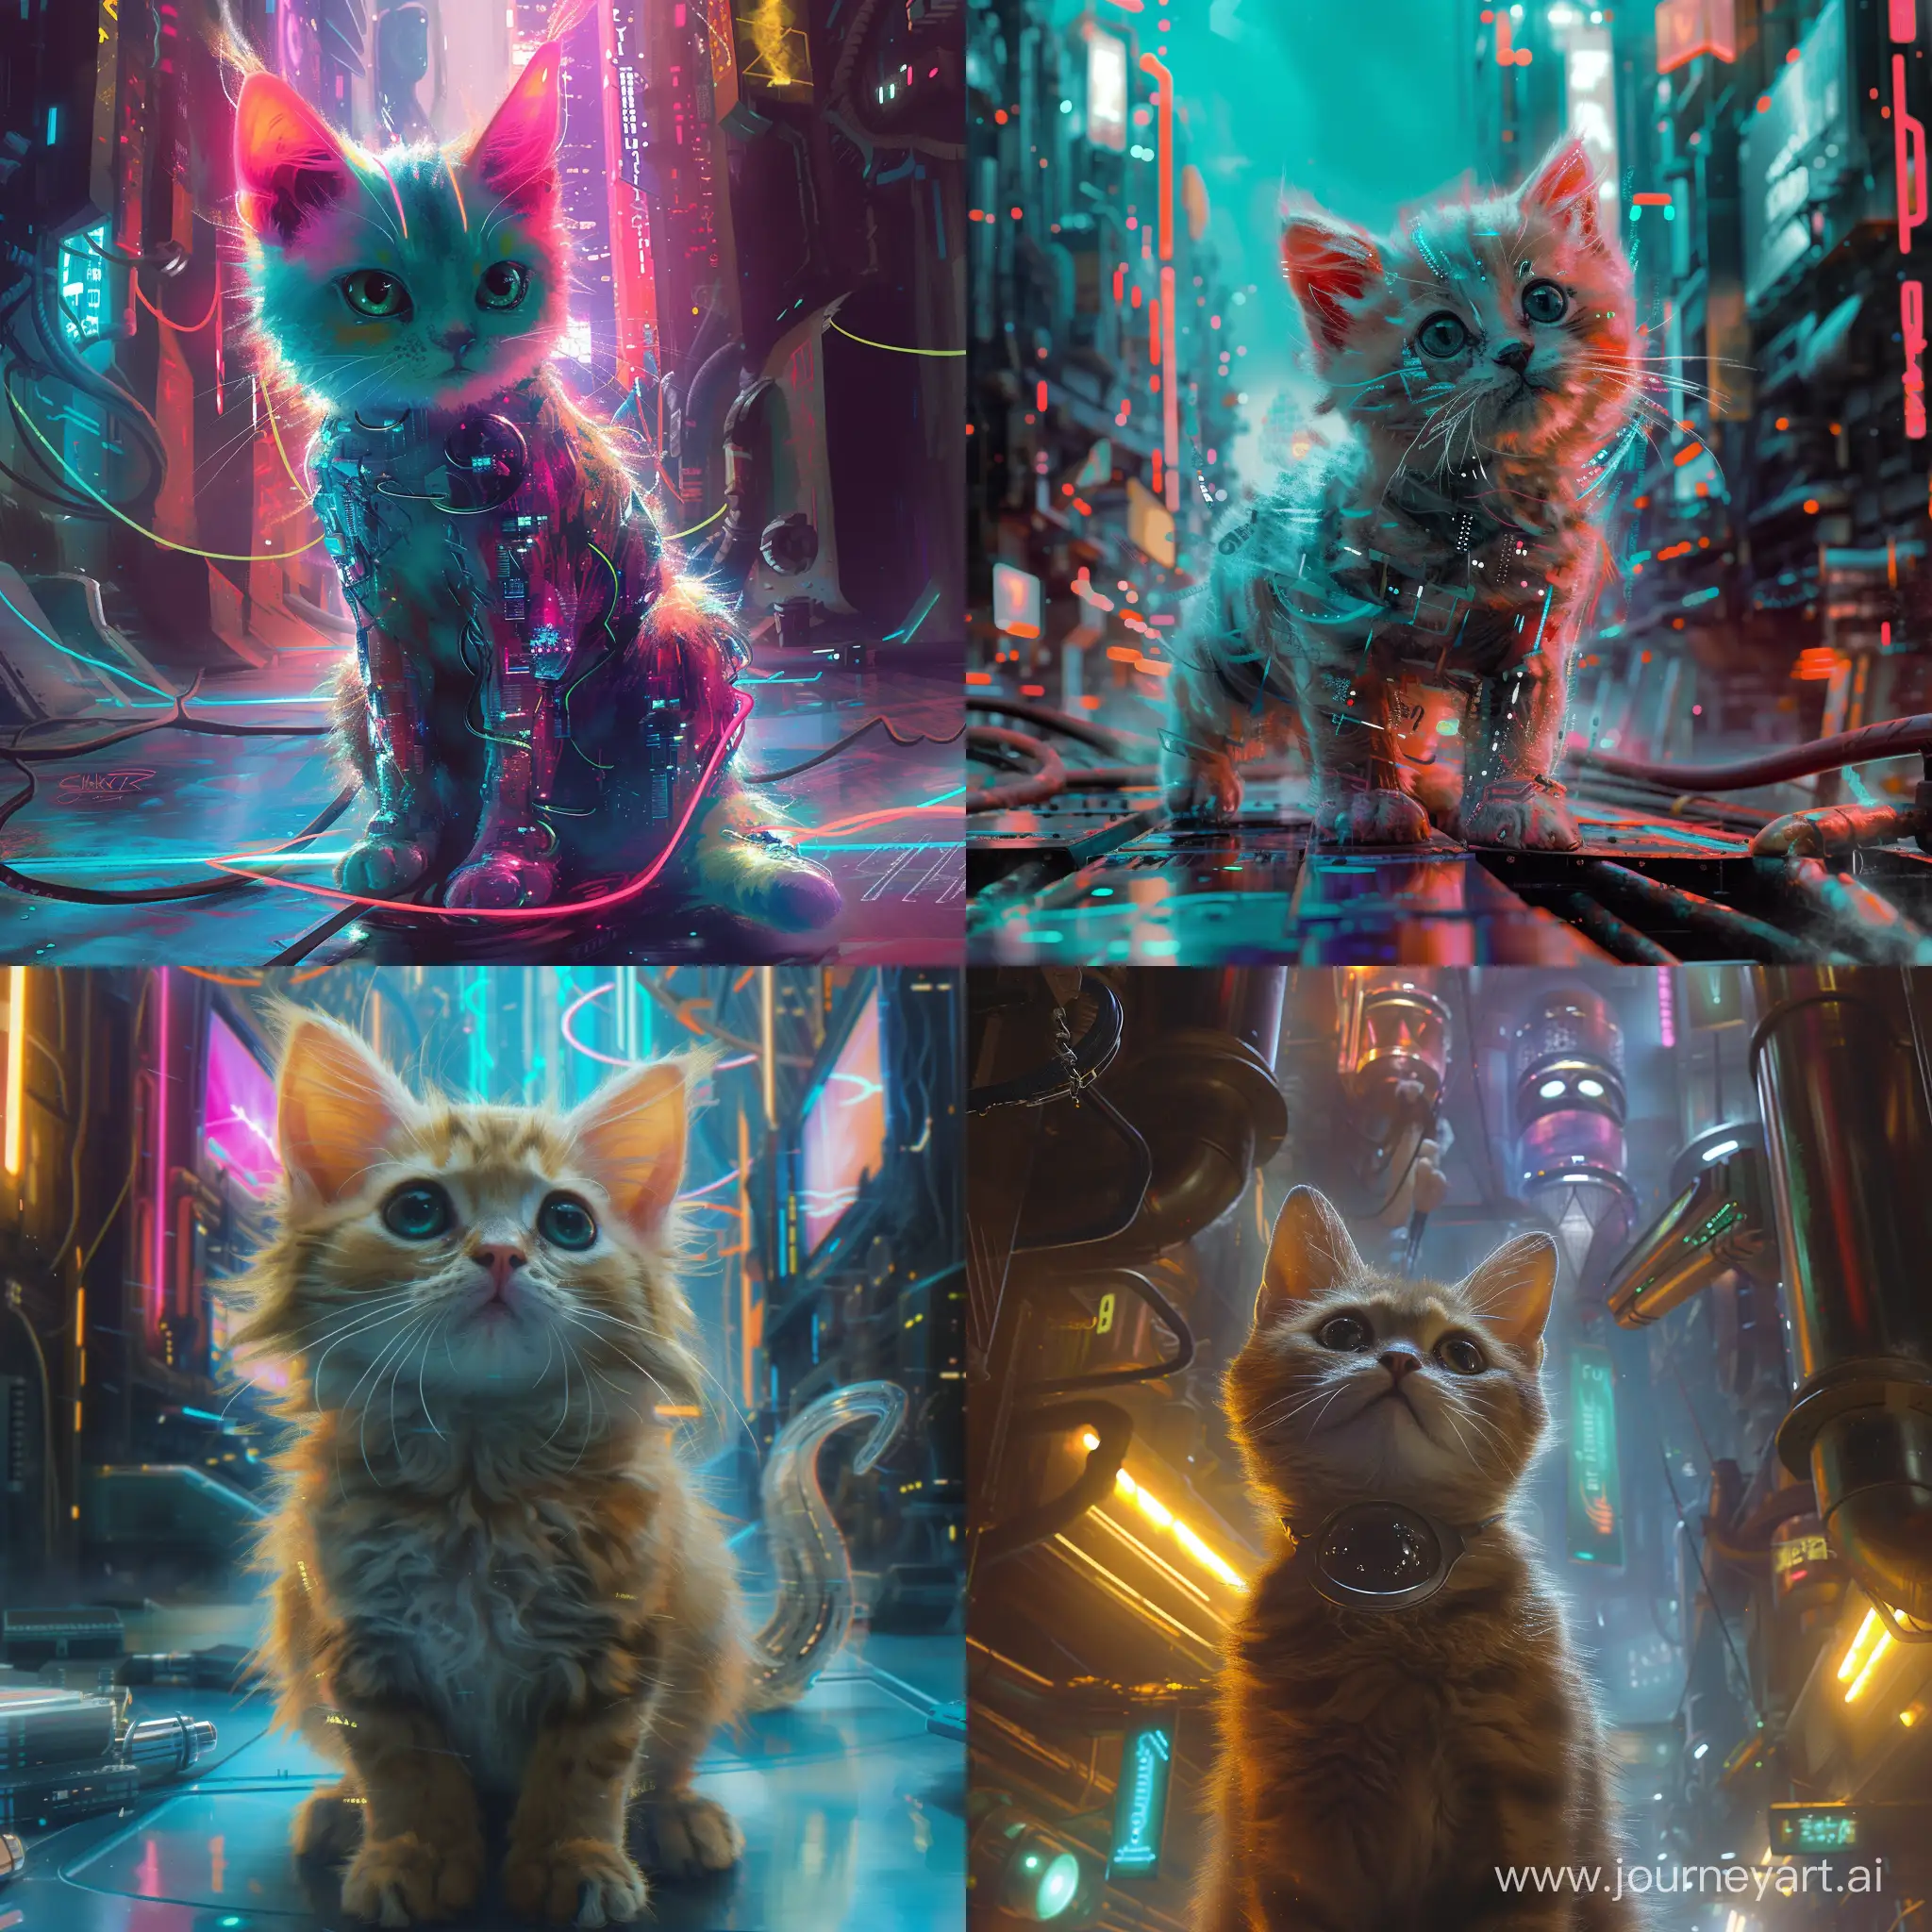 Enchanting-Cyberpunk-Kitty-in-a-Magical-Setting